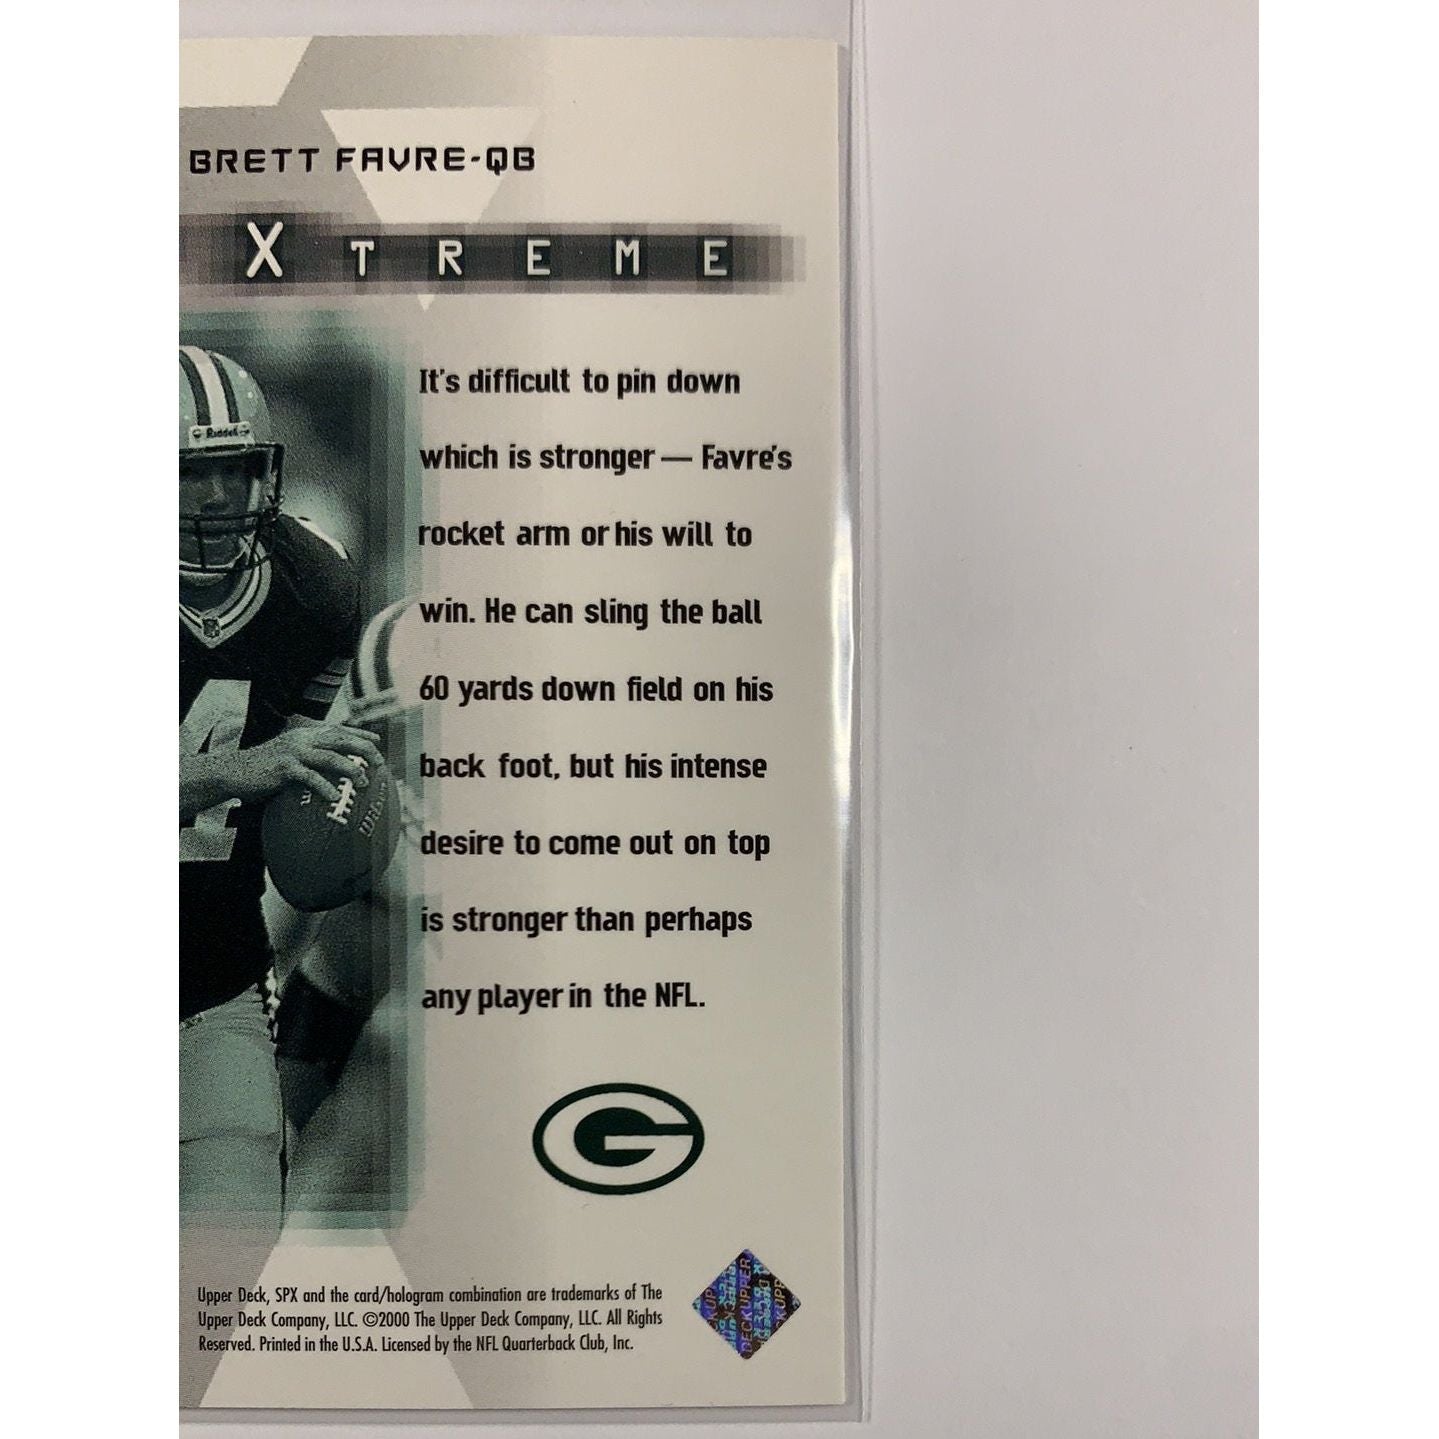  2000 SPx Brett Favre SP Xtreme  Local Legends Cards & Collectibles